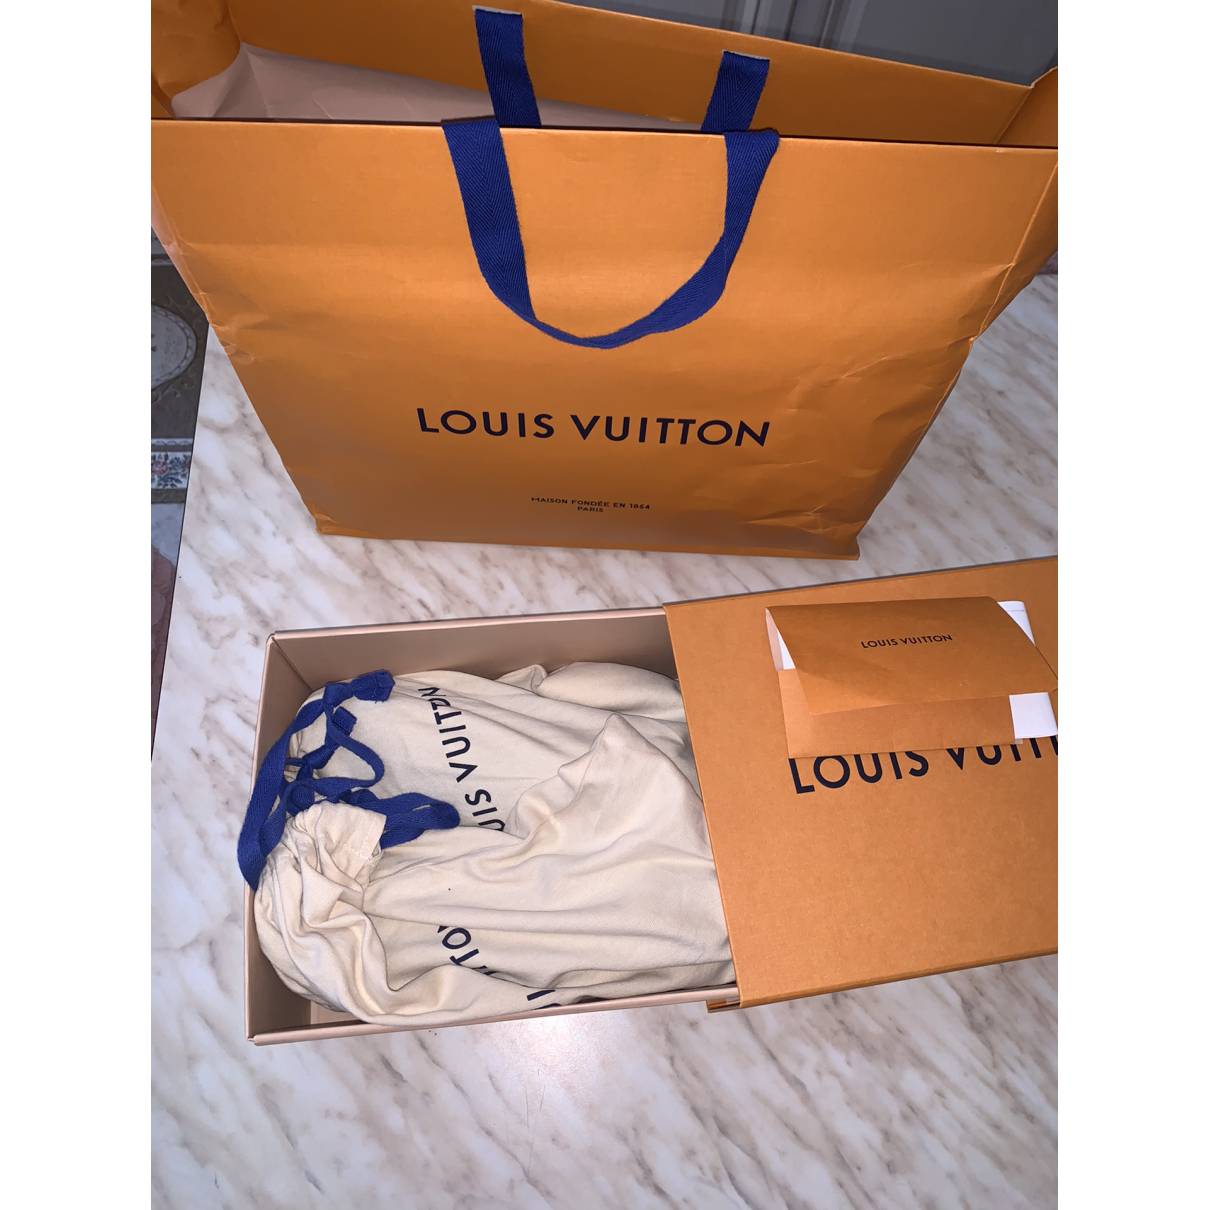 XL Louis Vuitton shopping bag